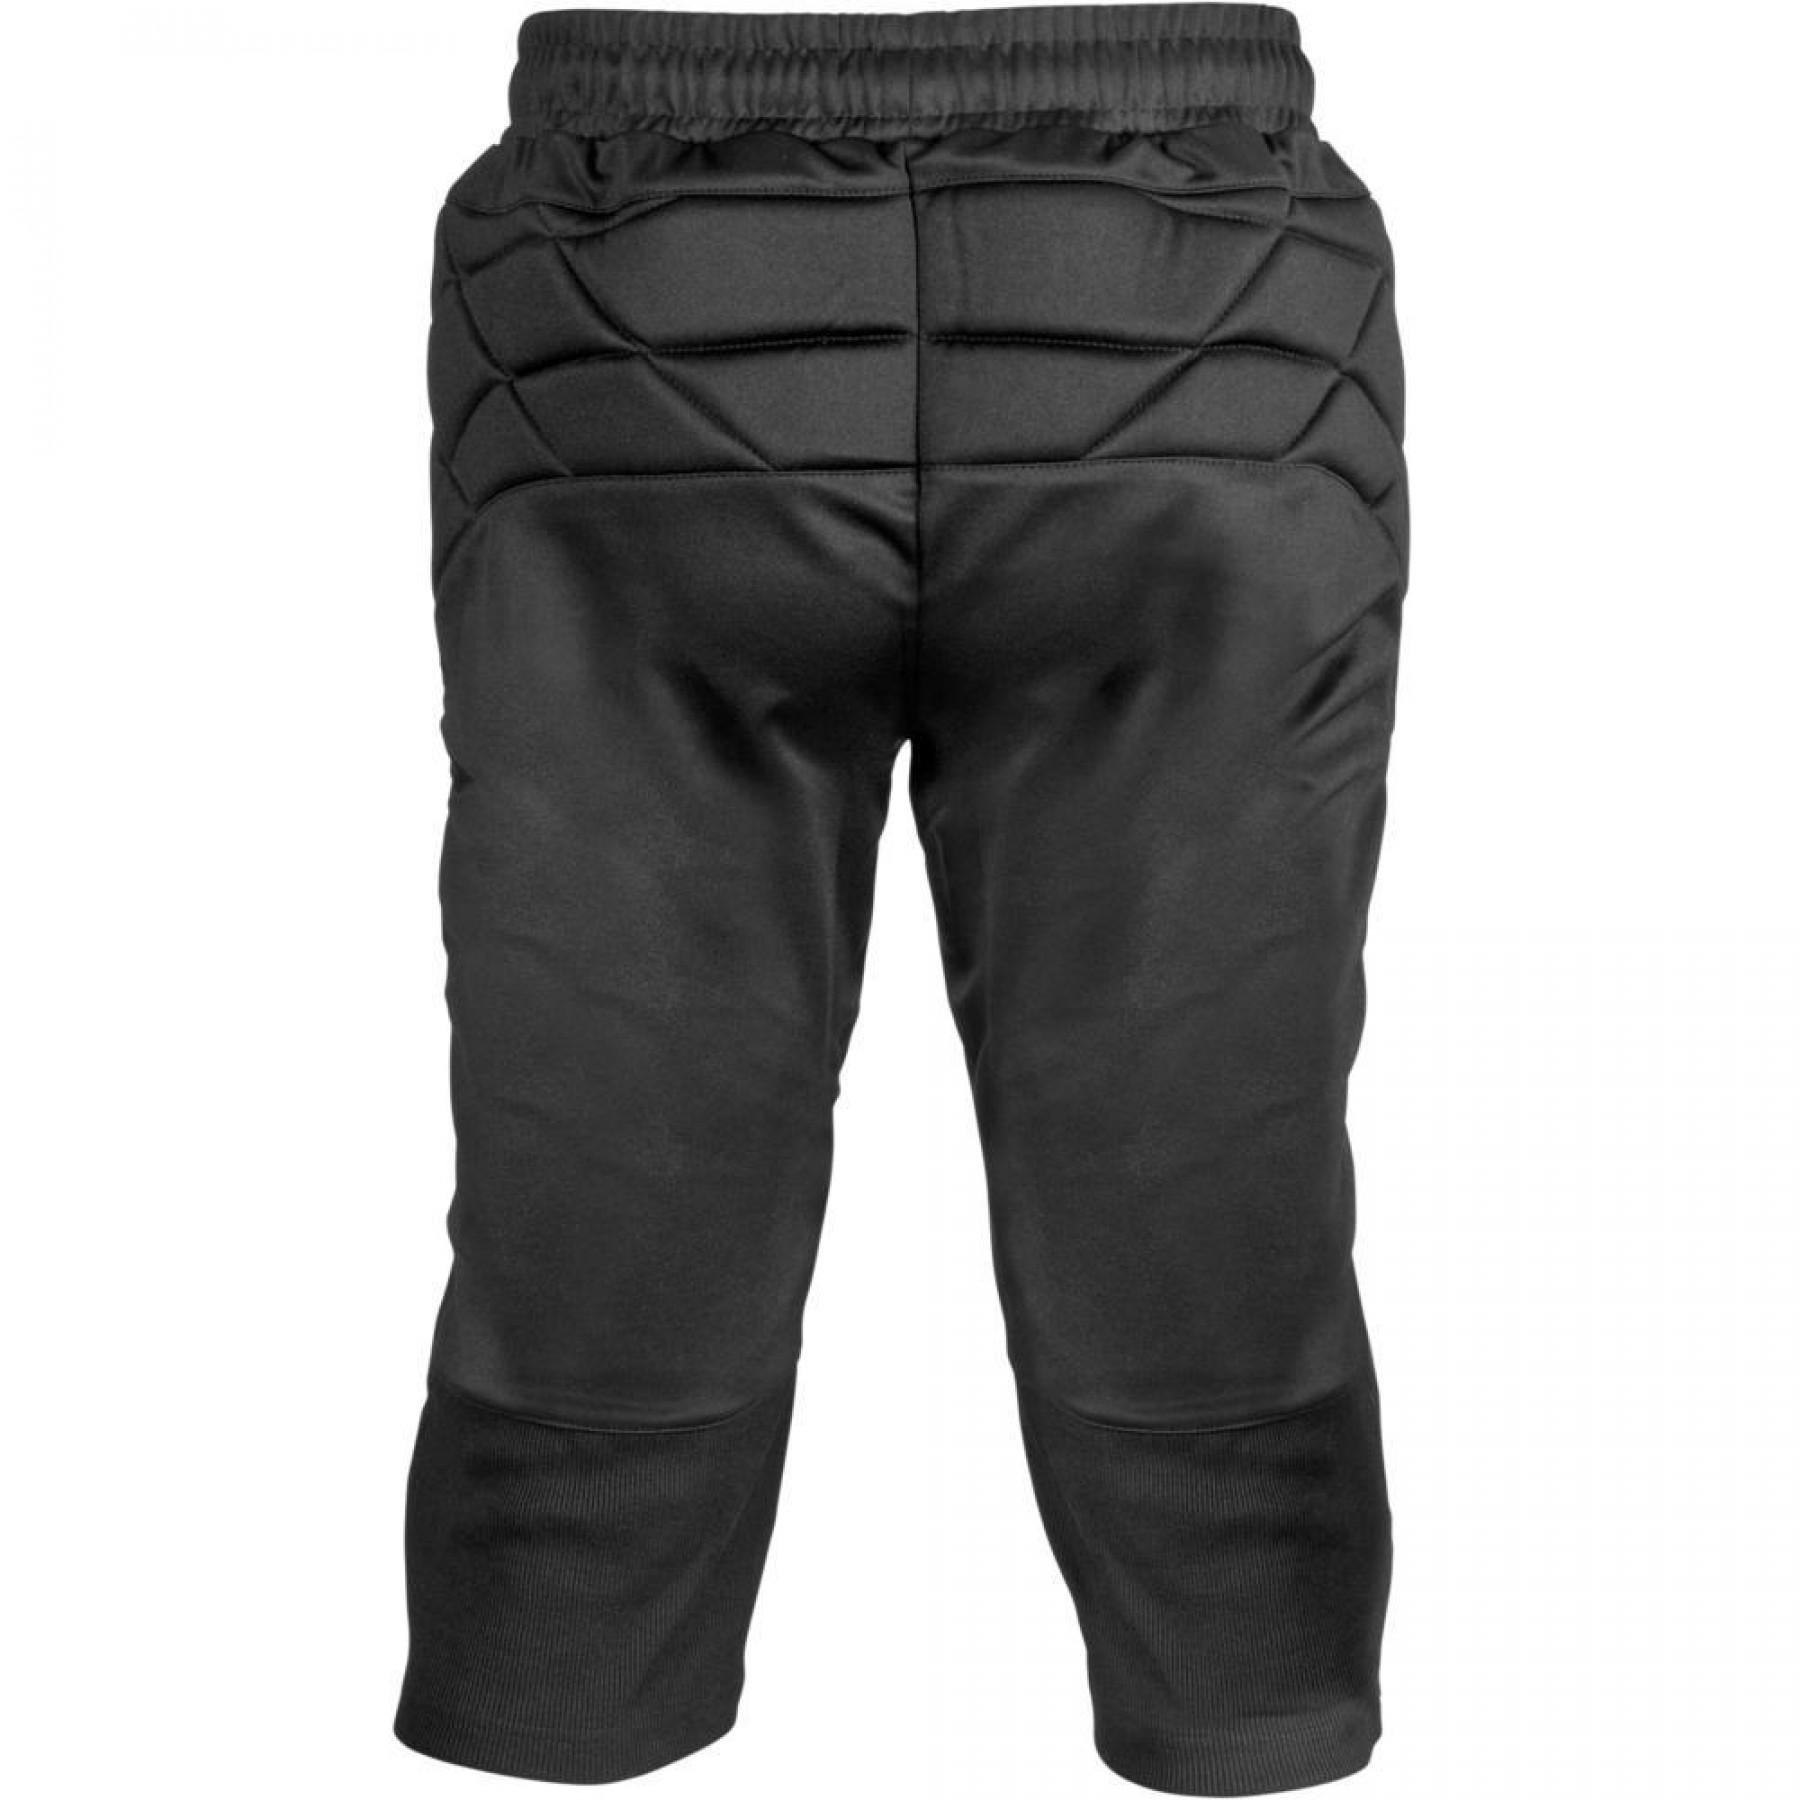 Pantalon 3/4 Reusch 360 Protection